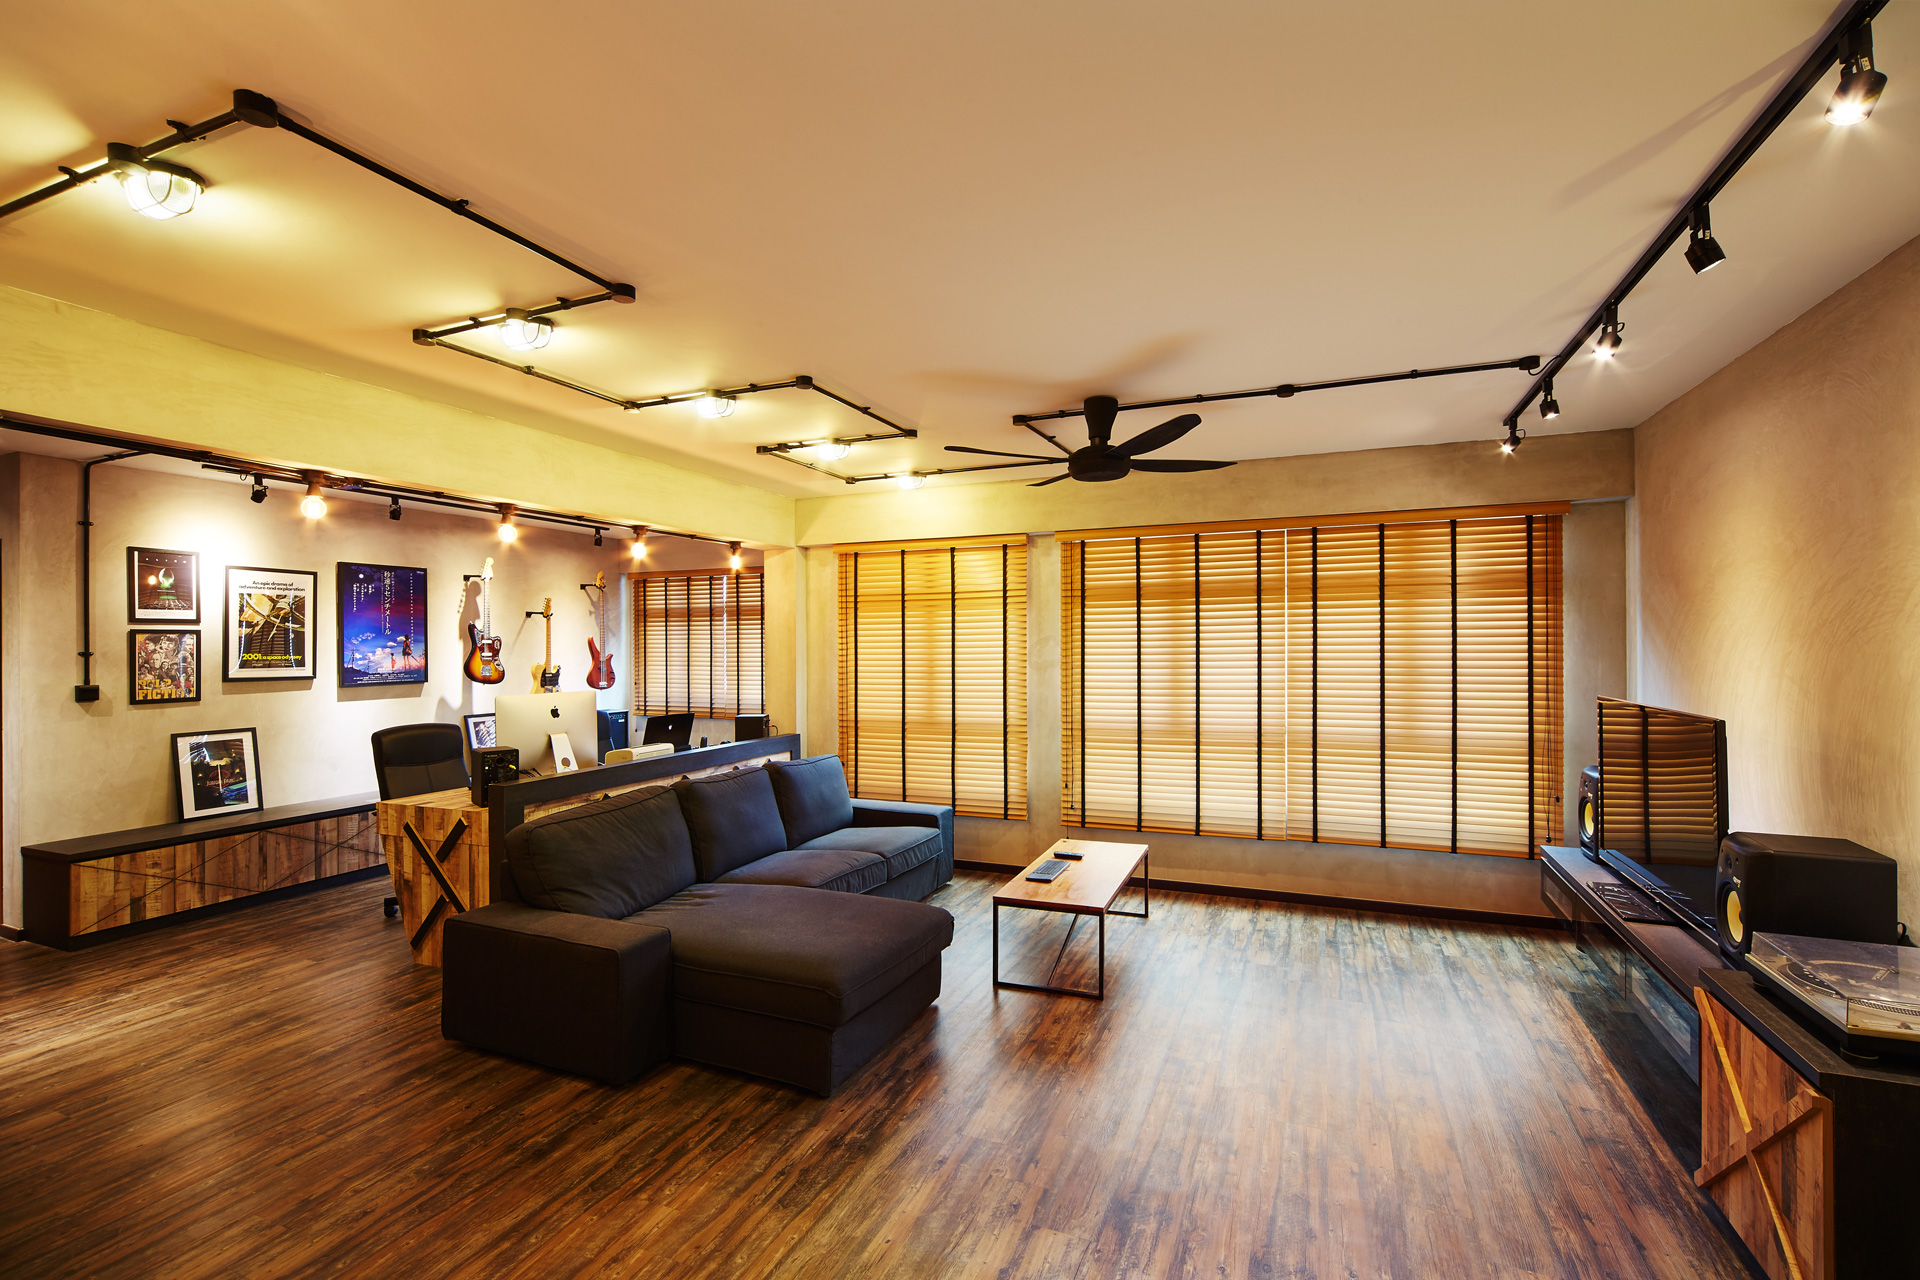 Industrial, Retro Design - Living Room - HDB 5 Room - Design by Dots n Tots Interior Pte Ltd